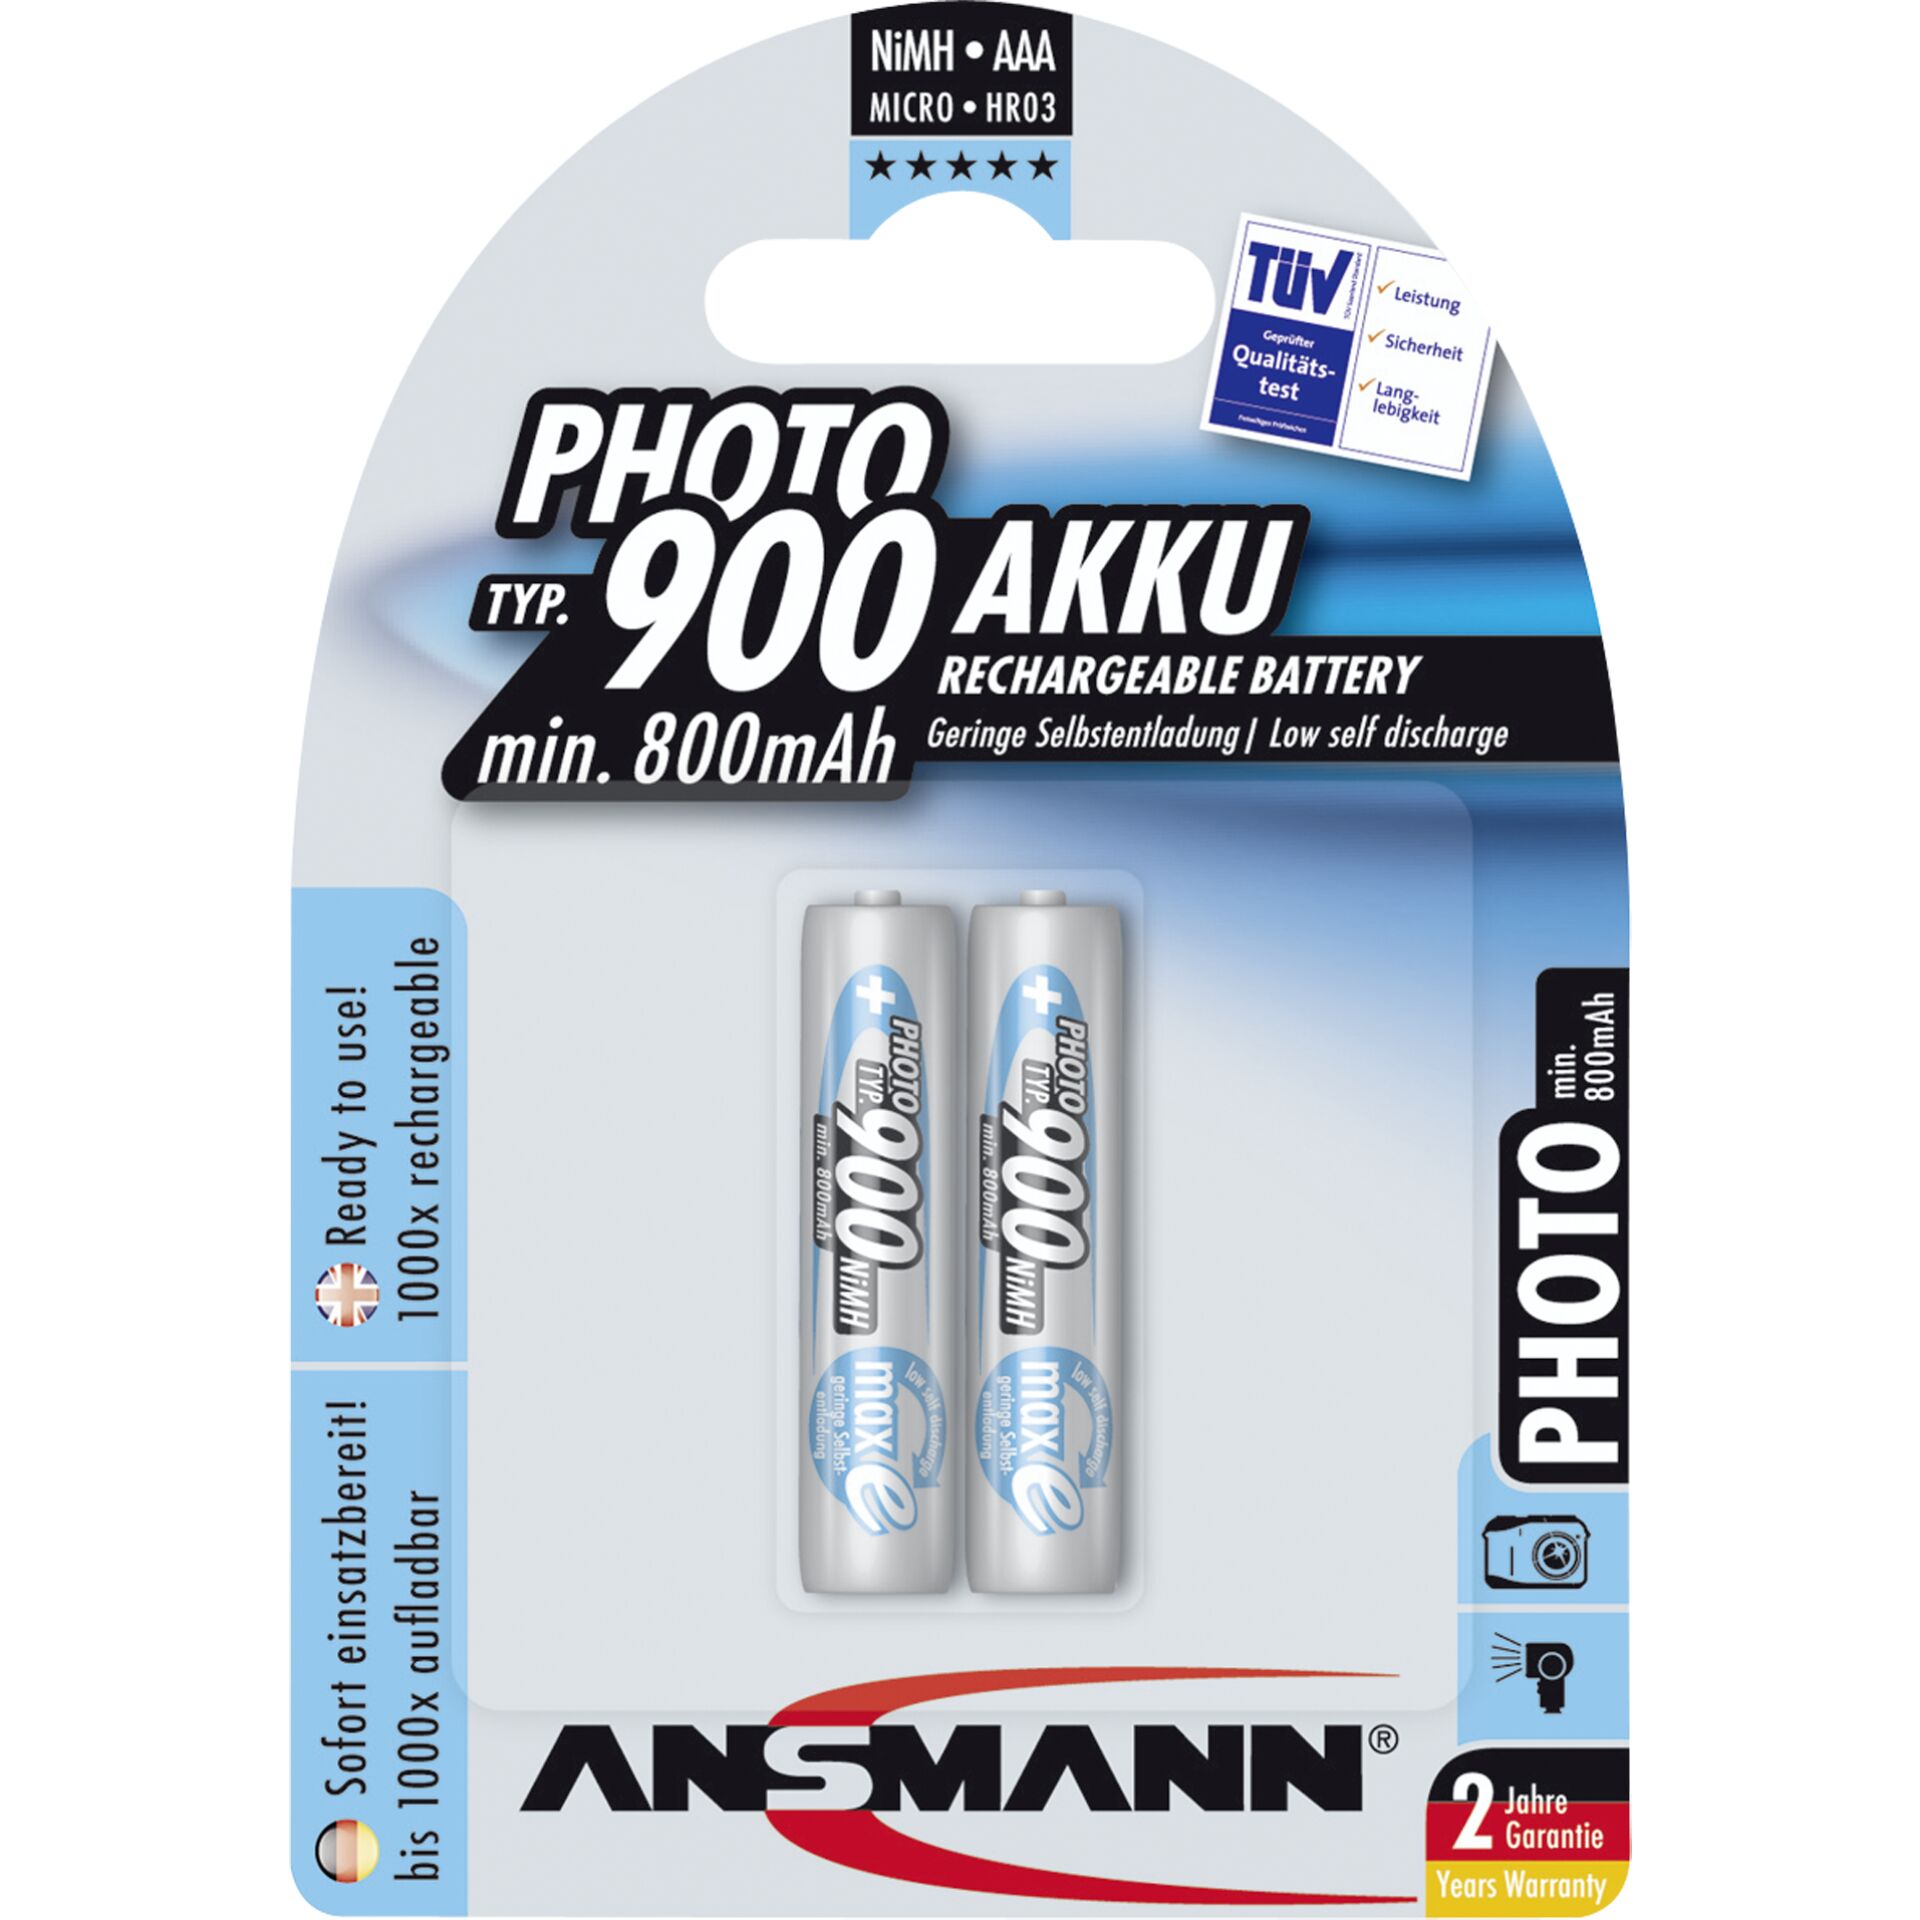 1x2 Ansmann maxE NiMH Akku 900 Micro AAA 800 mAh PHOTO